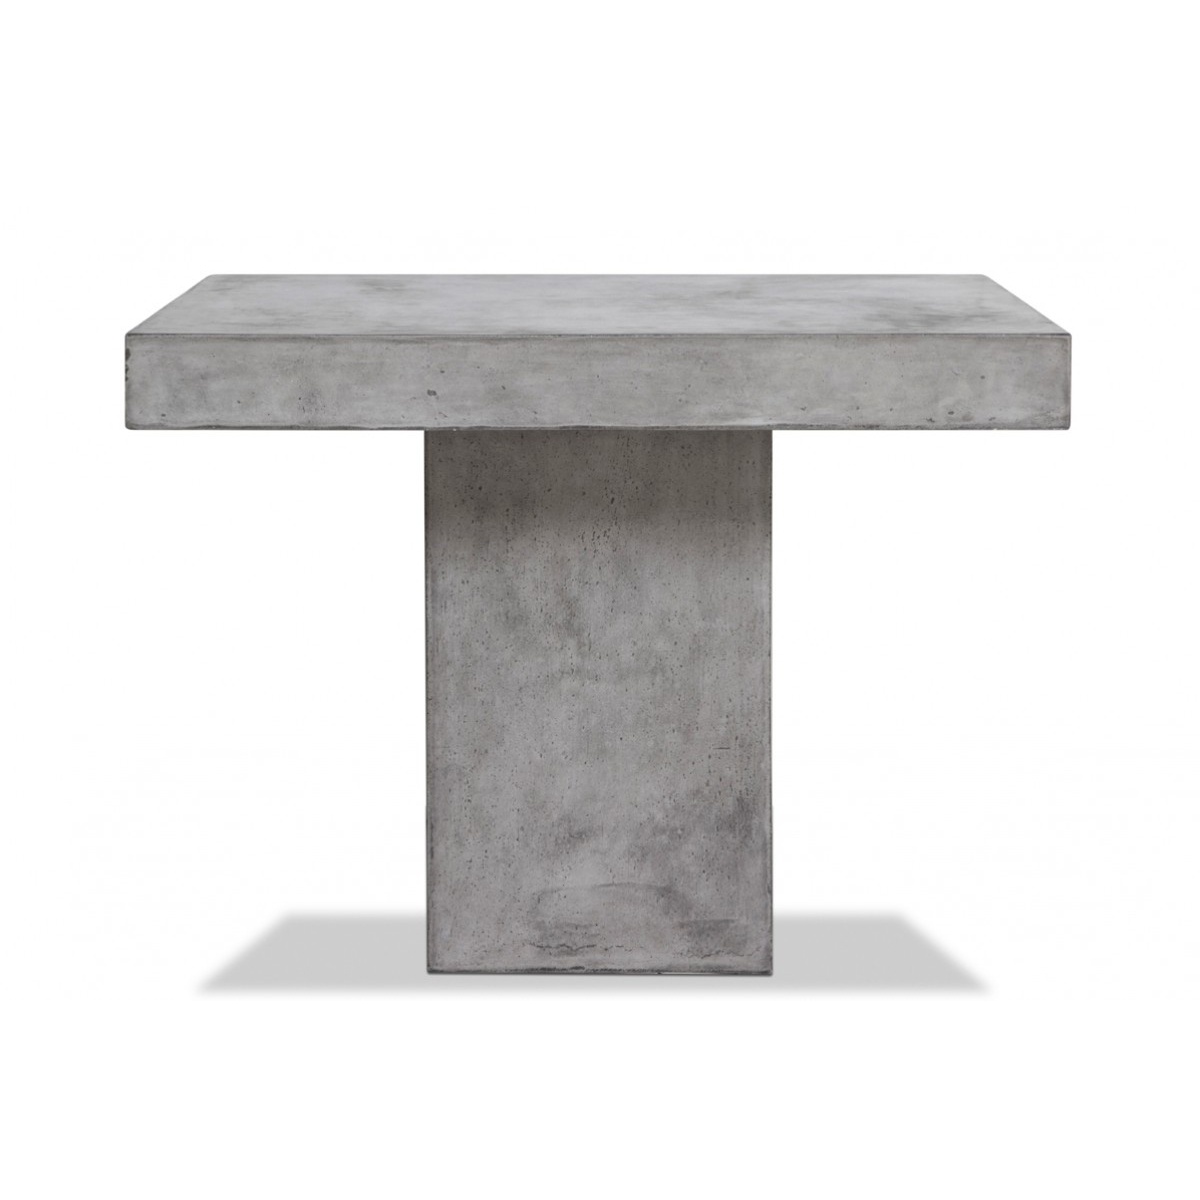 Concrete Cafe Table | Event Trade Show Furniture Rental | FormDecor